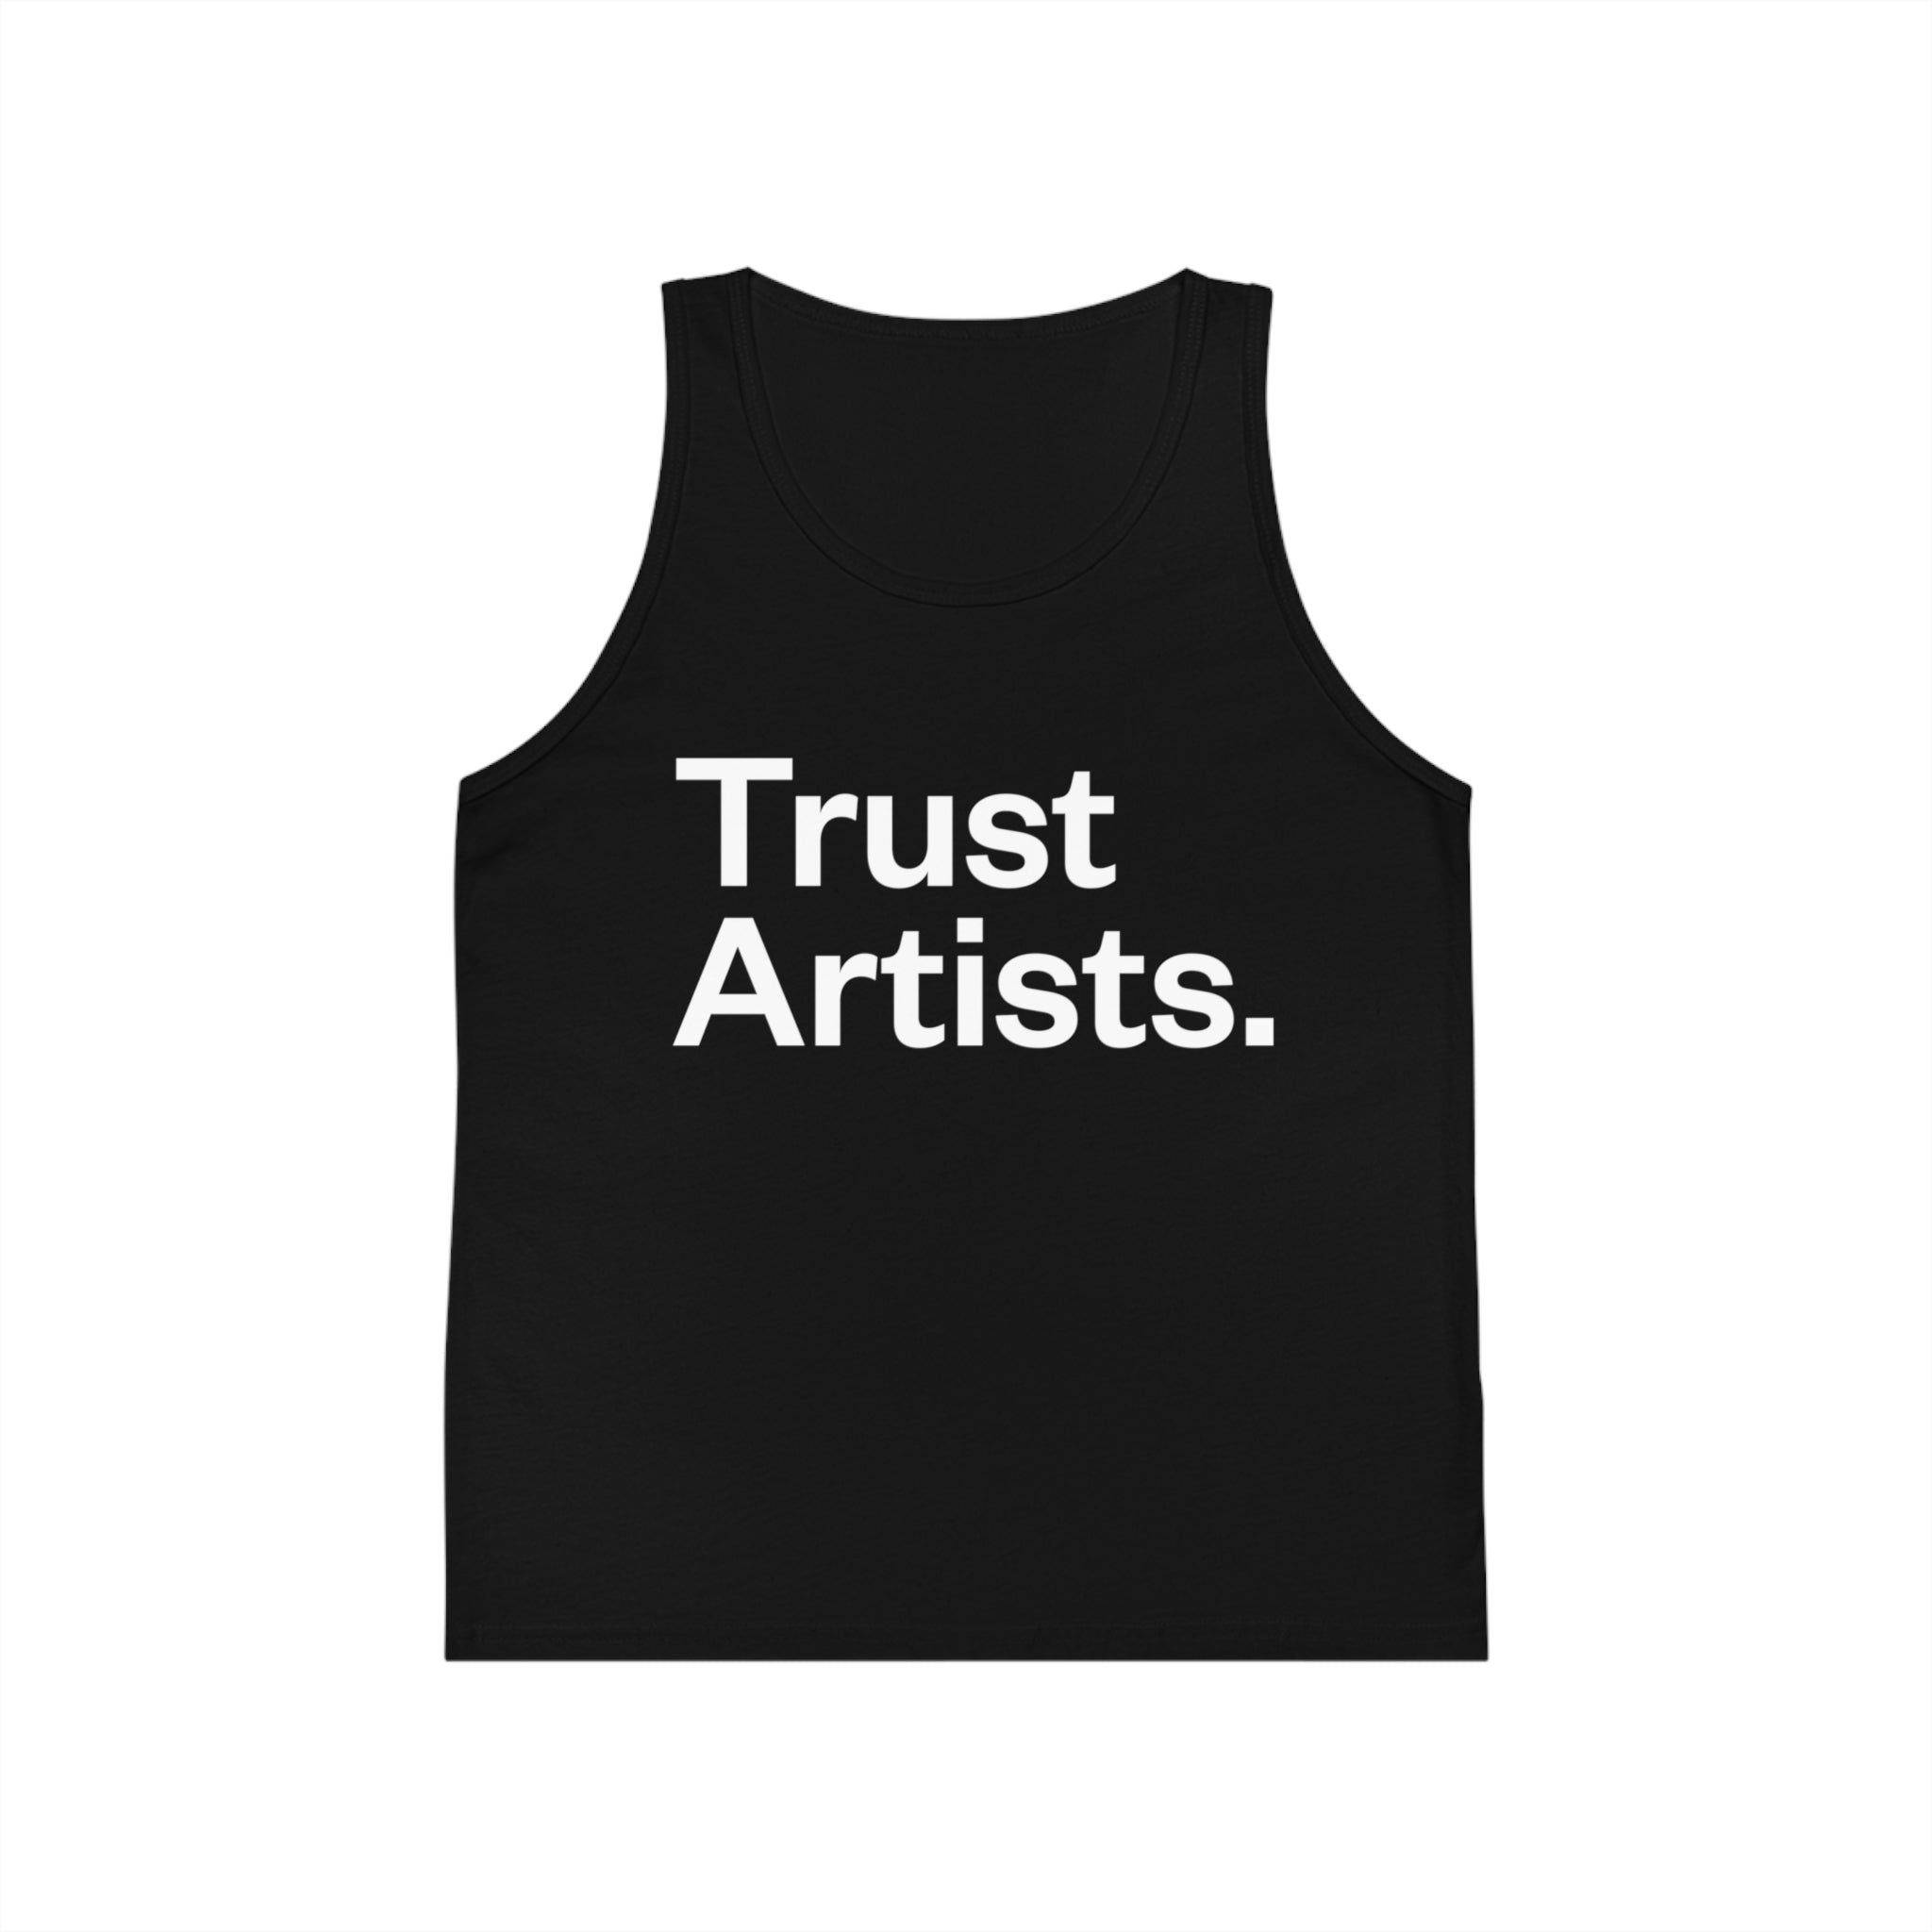 Trust Artists. Kid's Jersey Tank Top